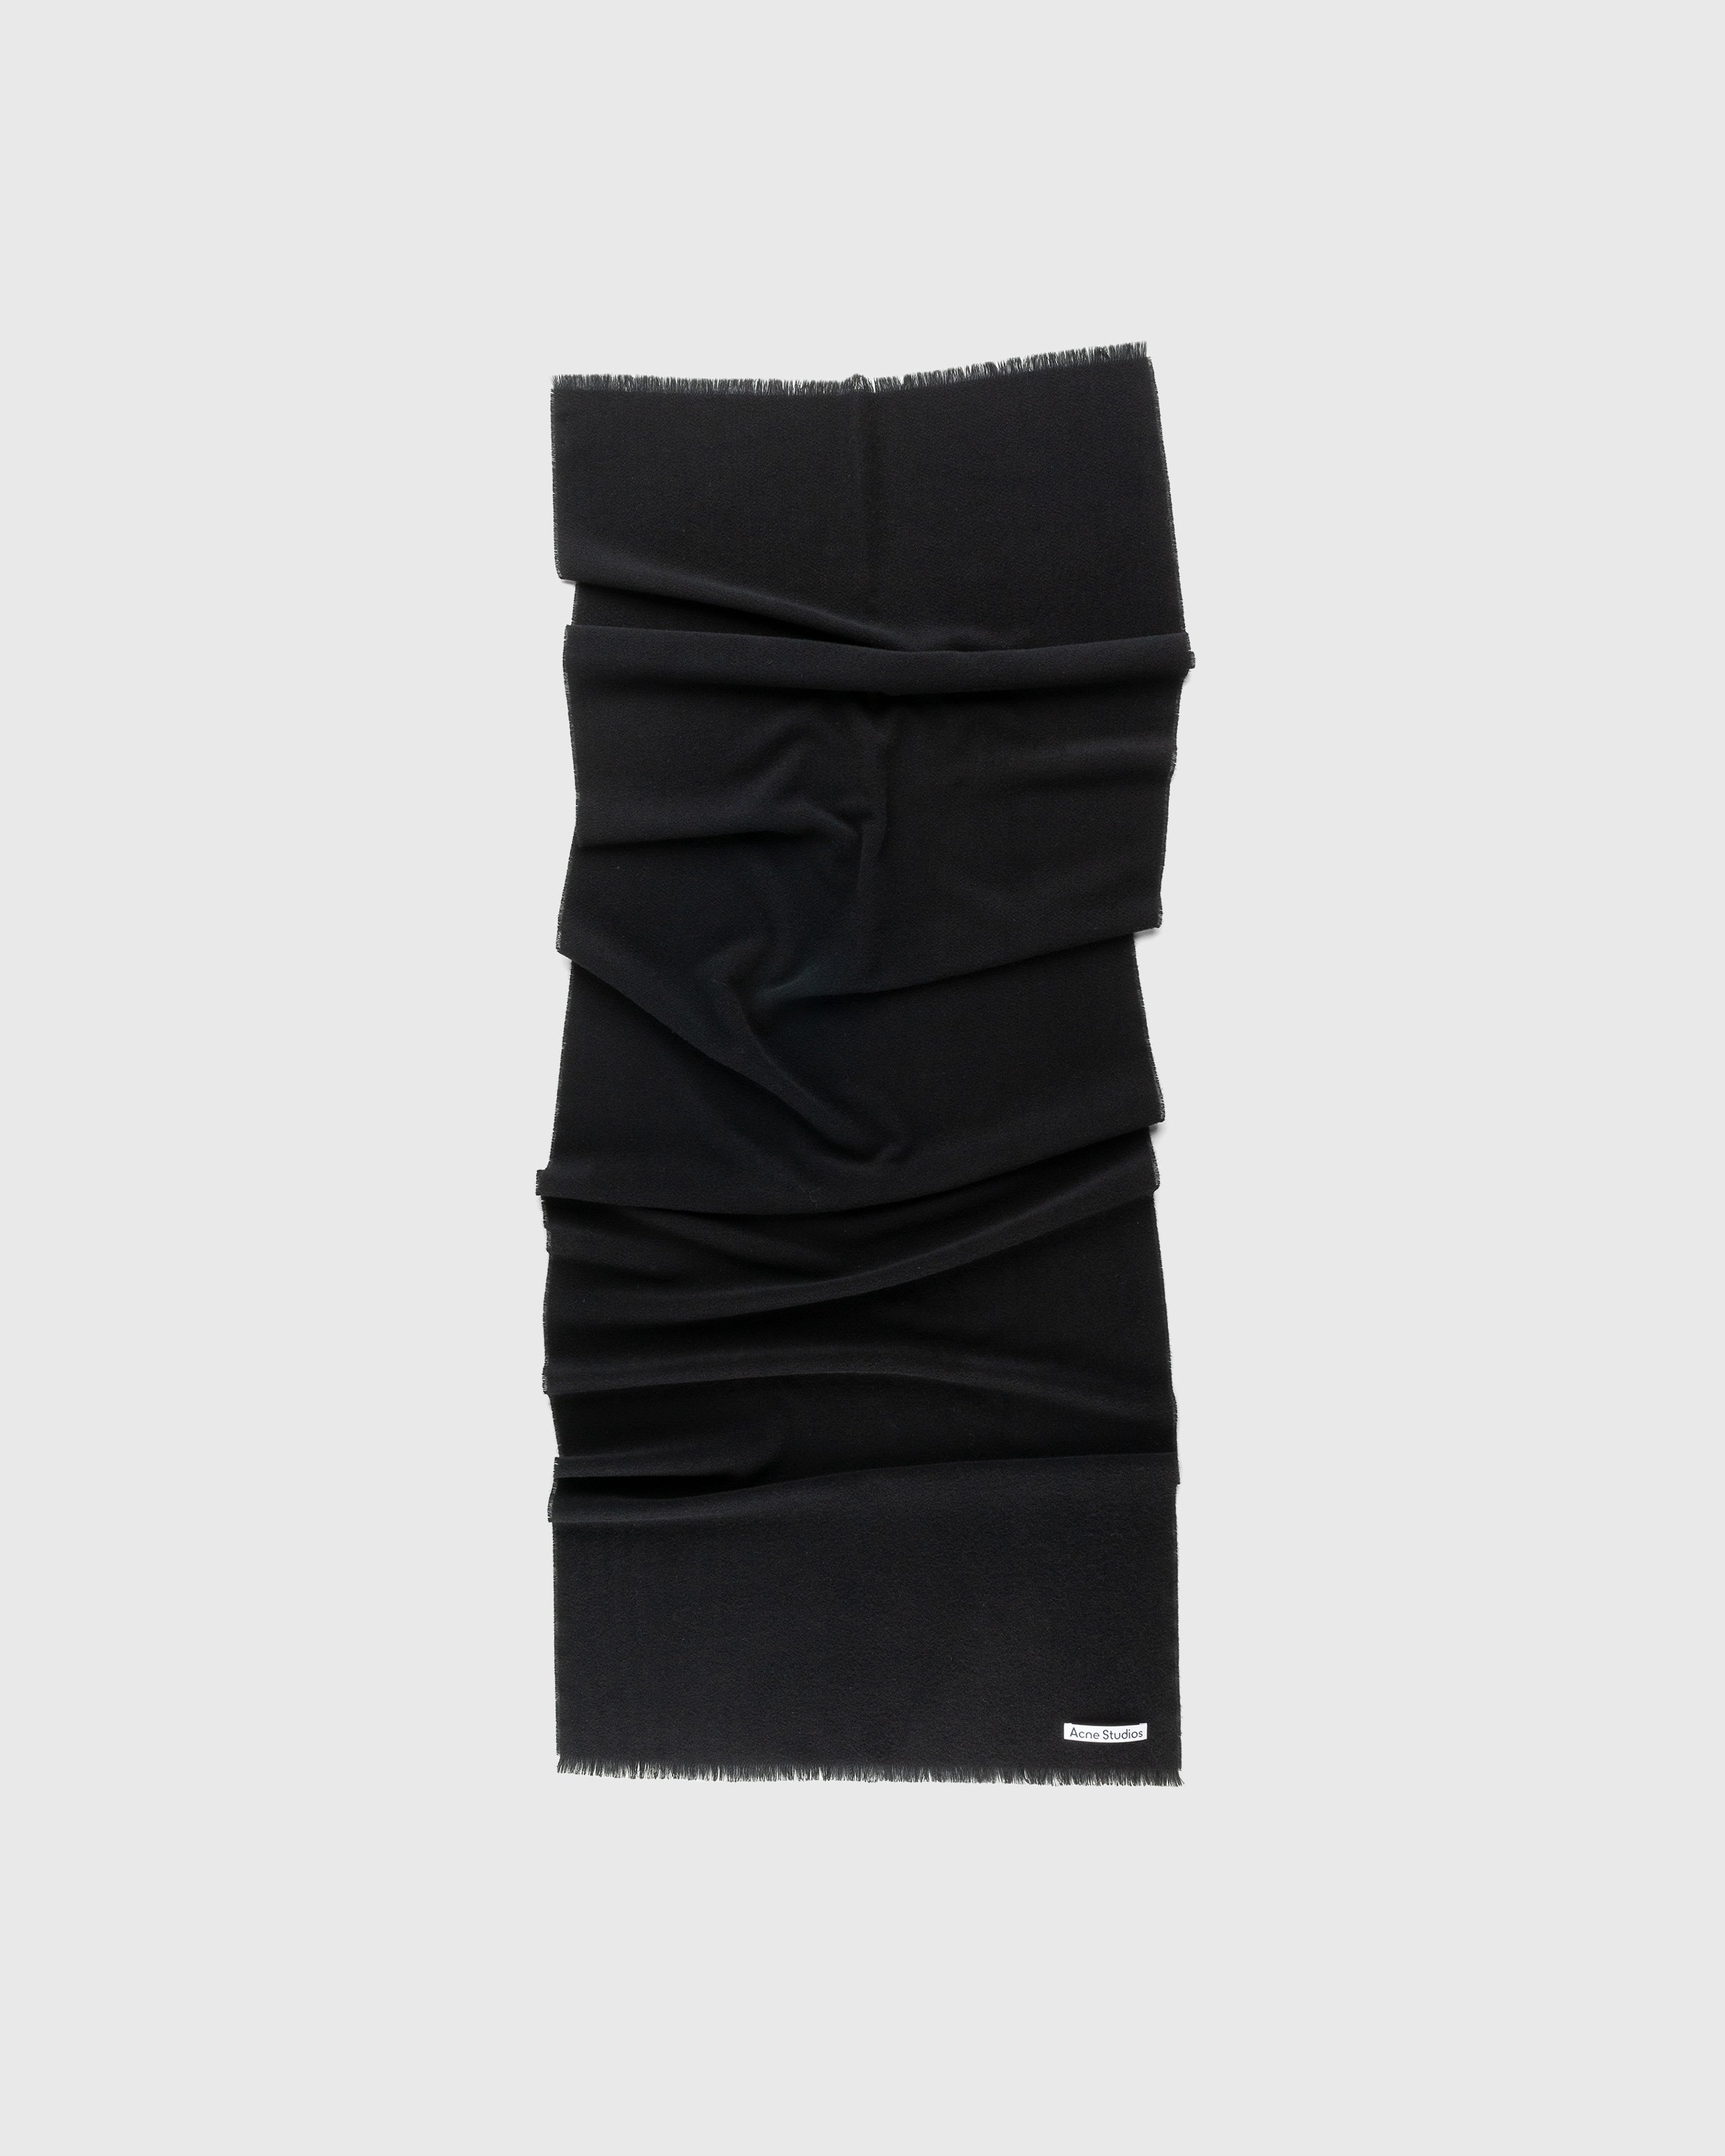 Acne Studios - Oversized Wool Scarf Black - Accessories - Black - Image 1